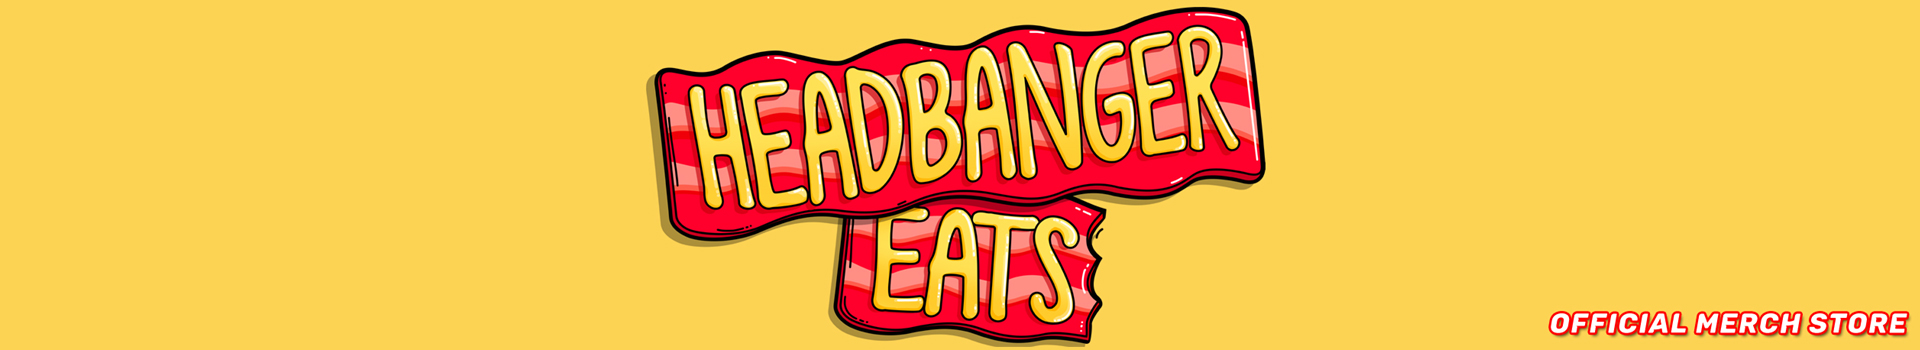 Headbanger Eats Merchandise